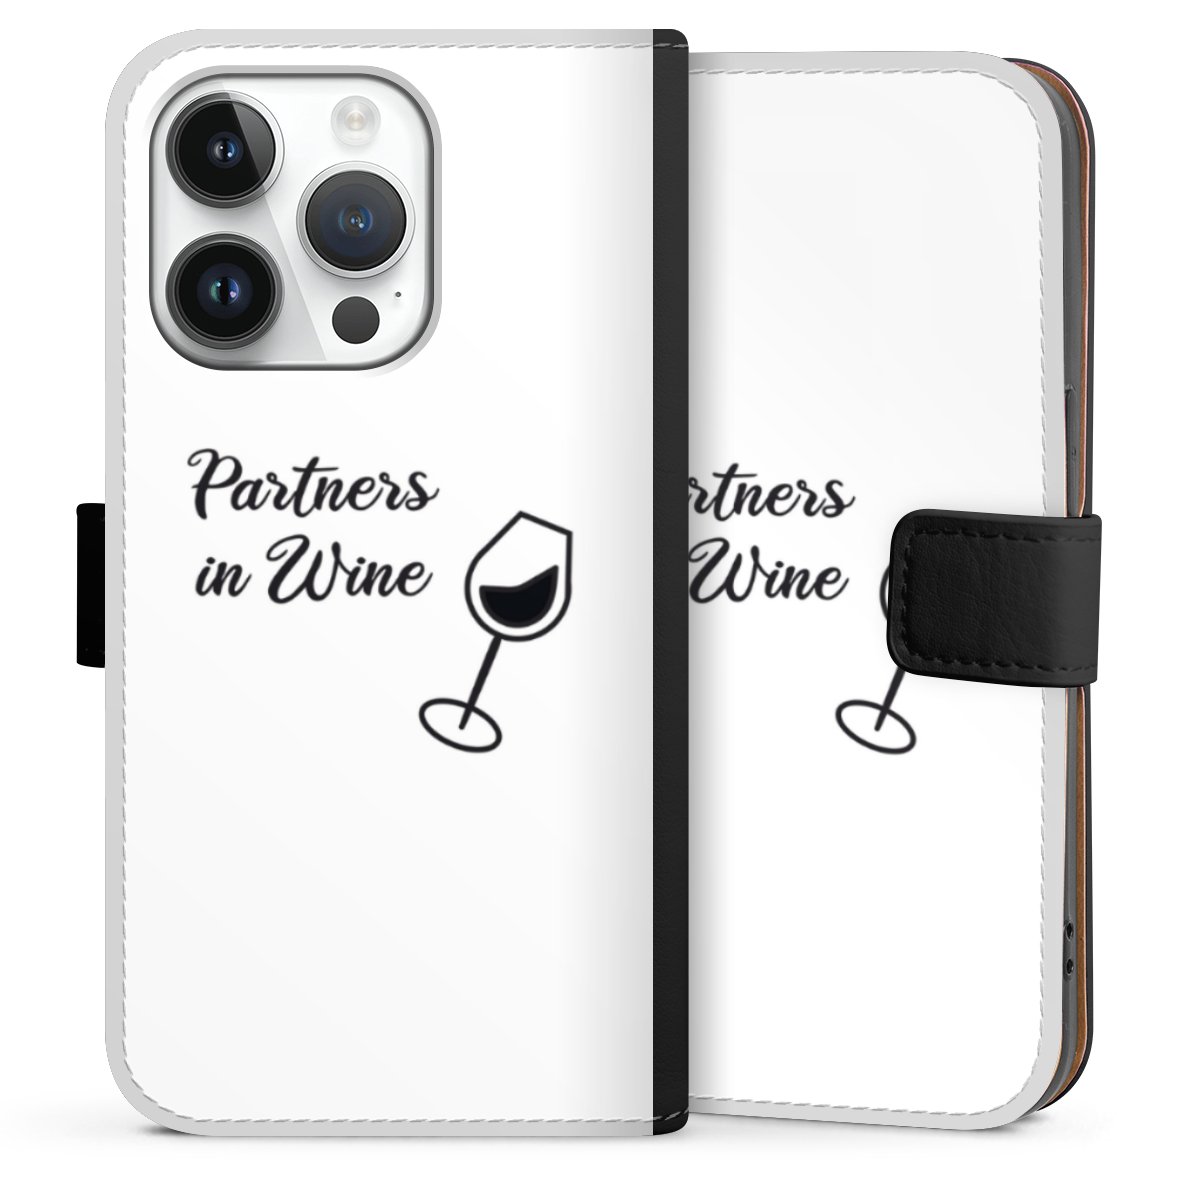 Partners in Wine